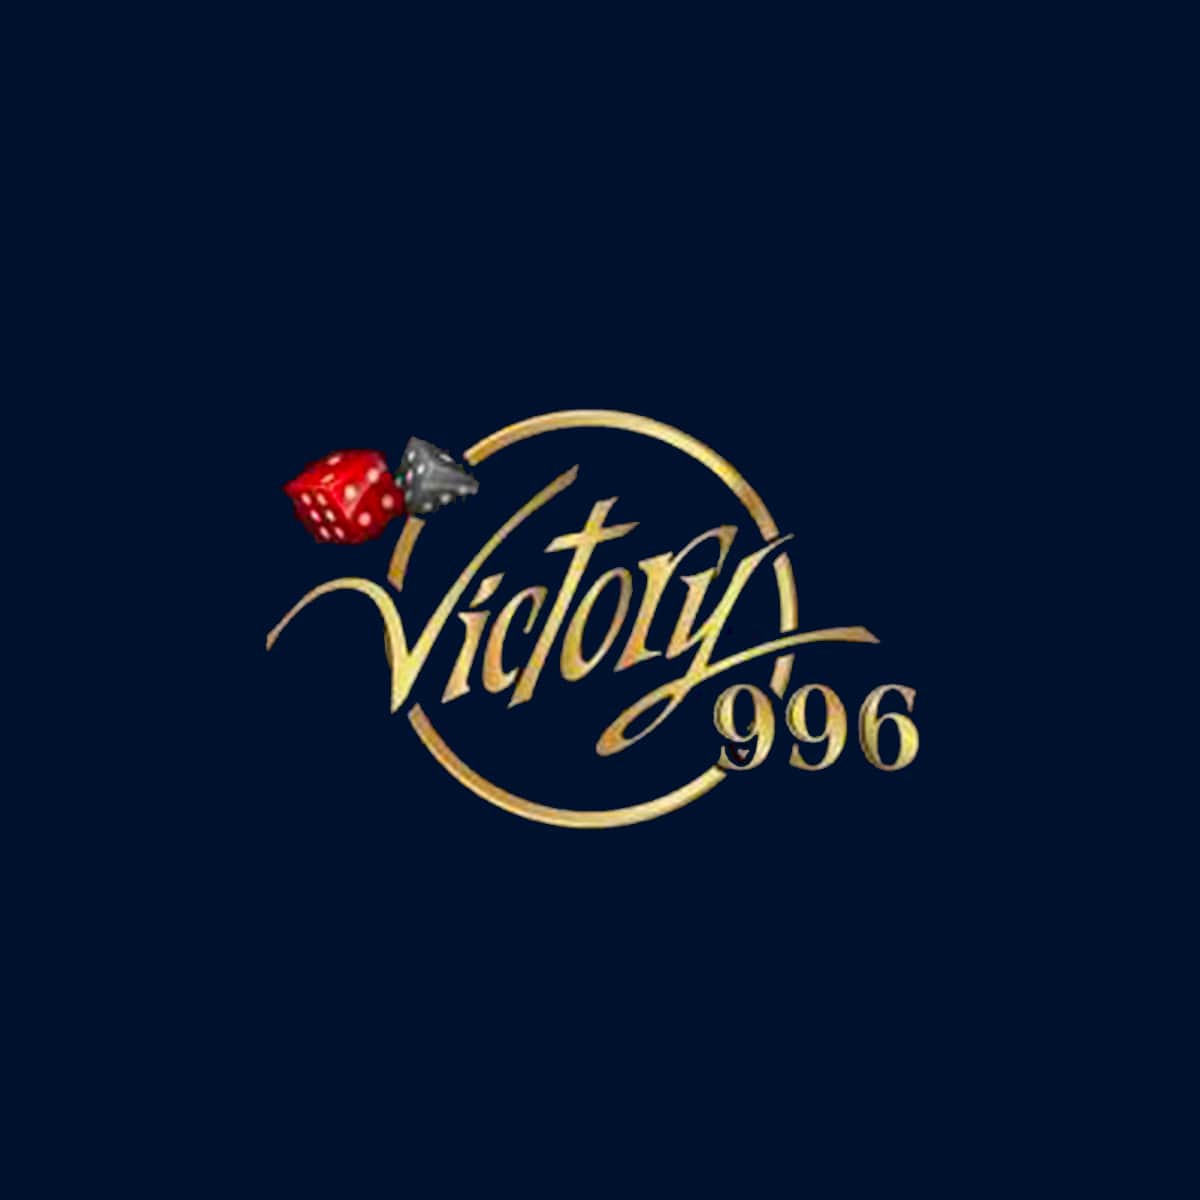 Victory996 Casino: Blacklisted Online Casino Malaysia | SafeGaming